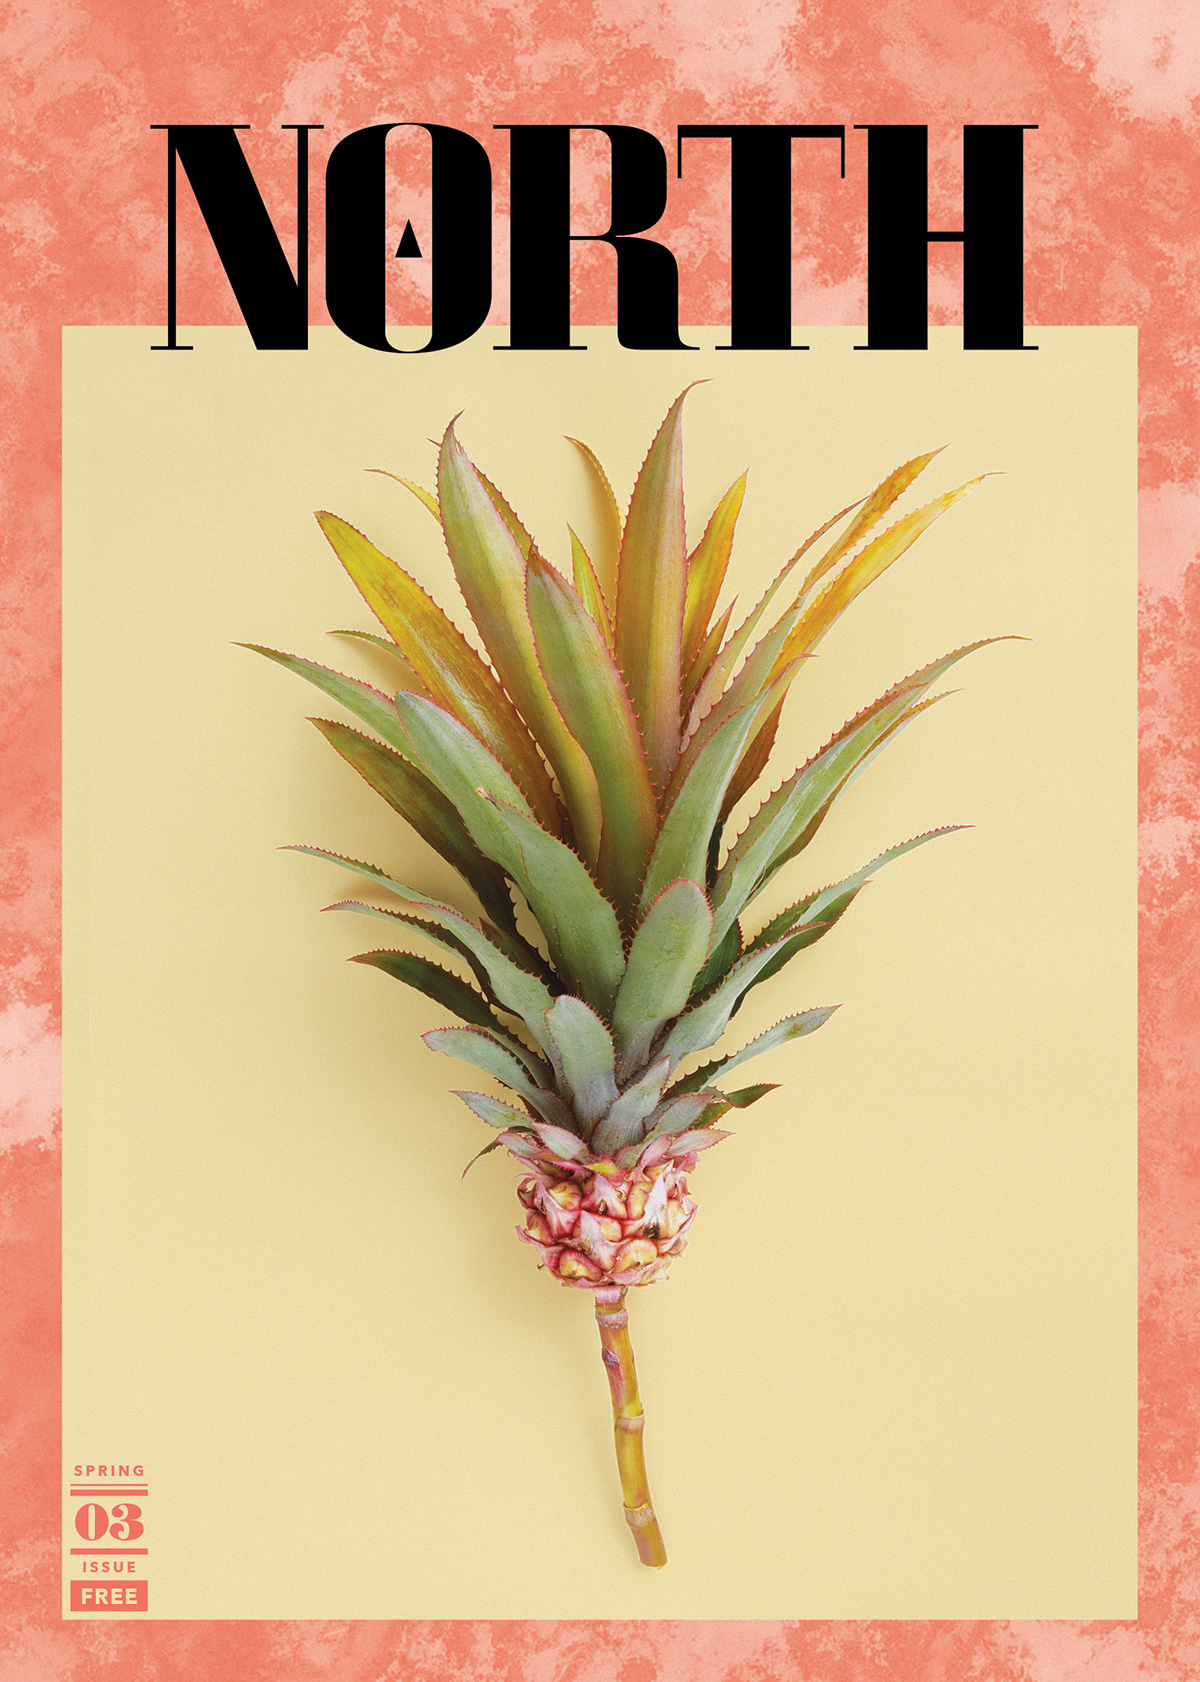 North Journal newspaper Magazine design publishing   Pineapple spring